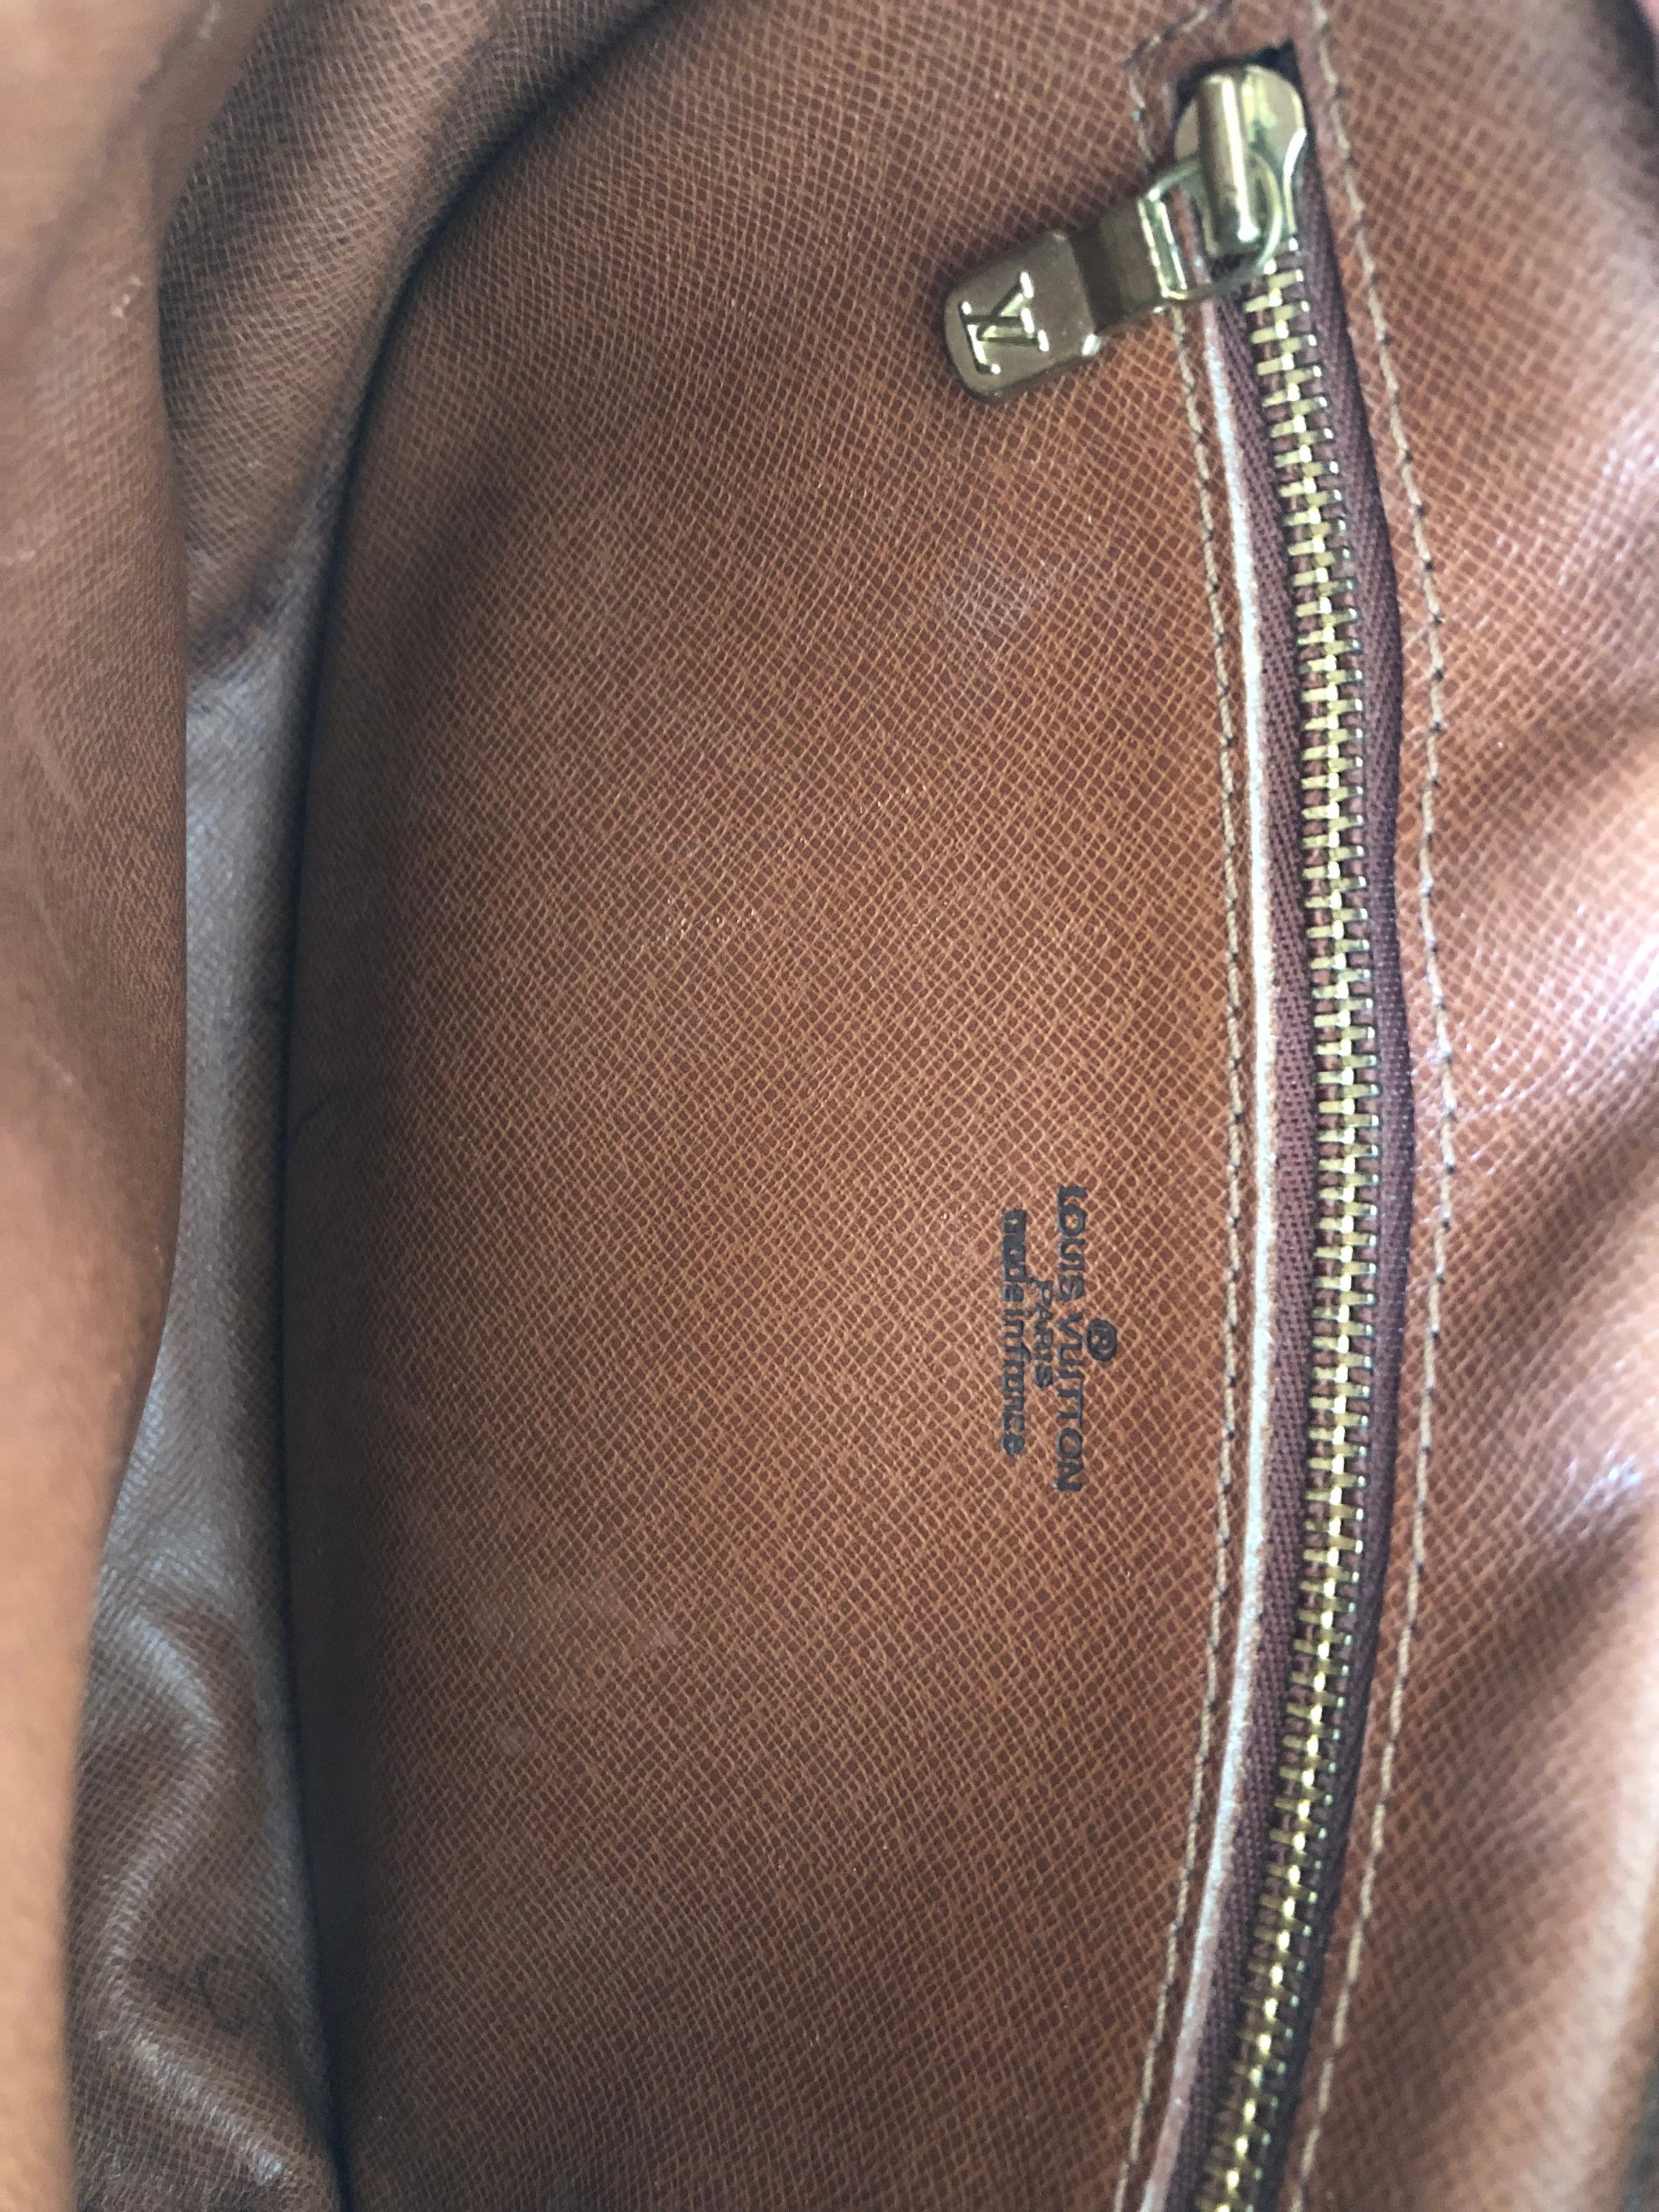 Vintage Louis Vuitton Monogram Jeune Fille PM Crossbody Bag TH0940 061923  $200 OFF NO ADDITIONAL DISCOUNTS